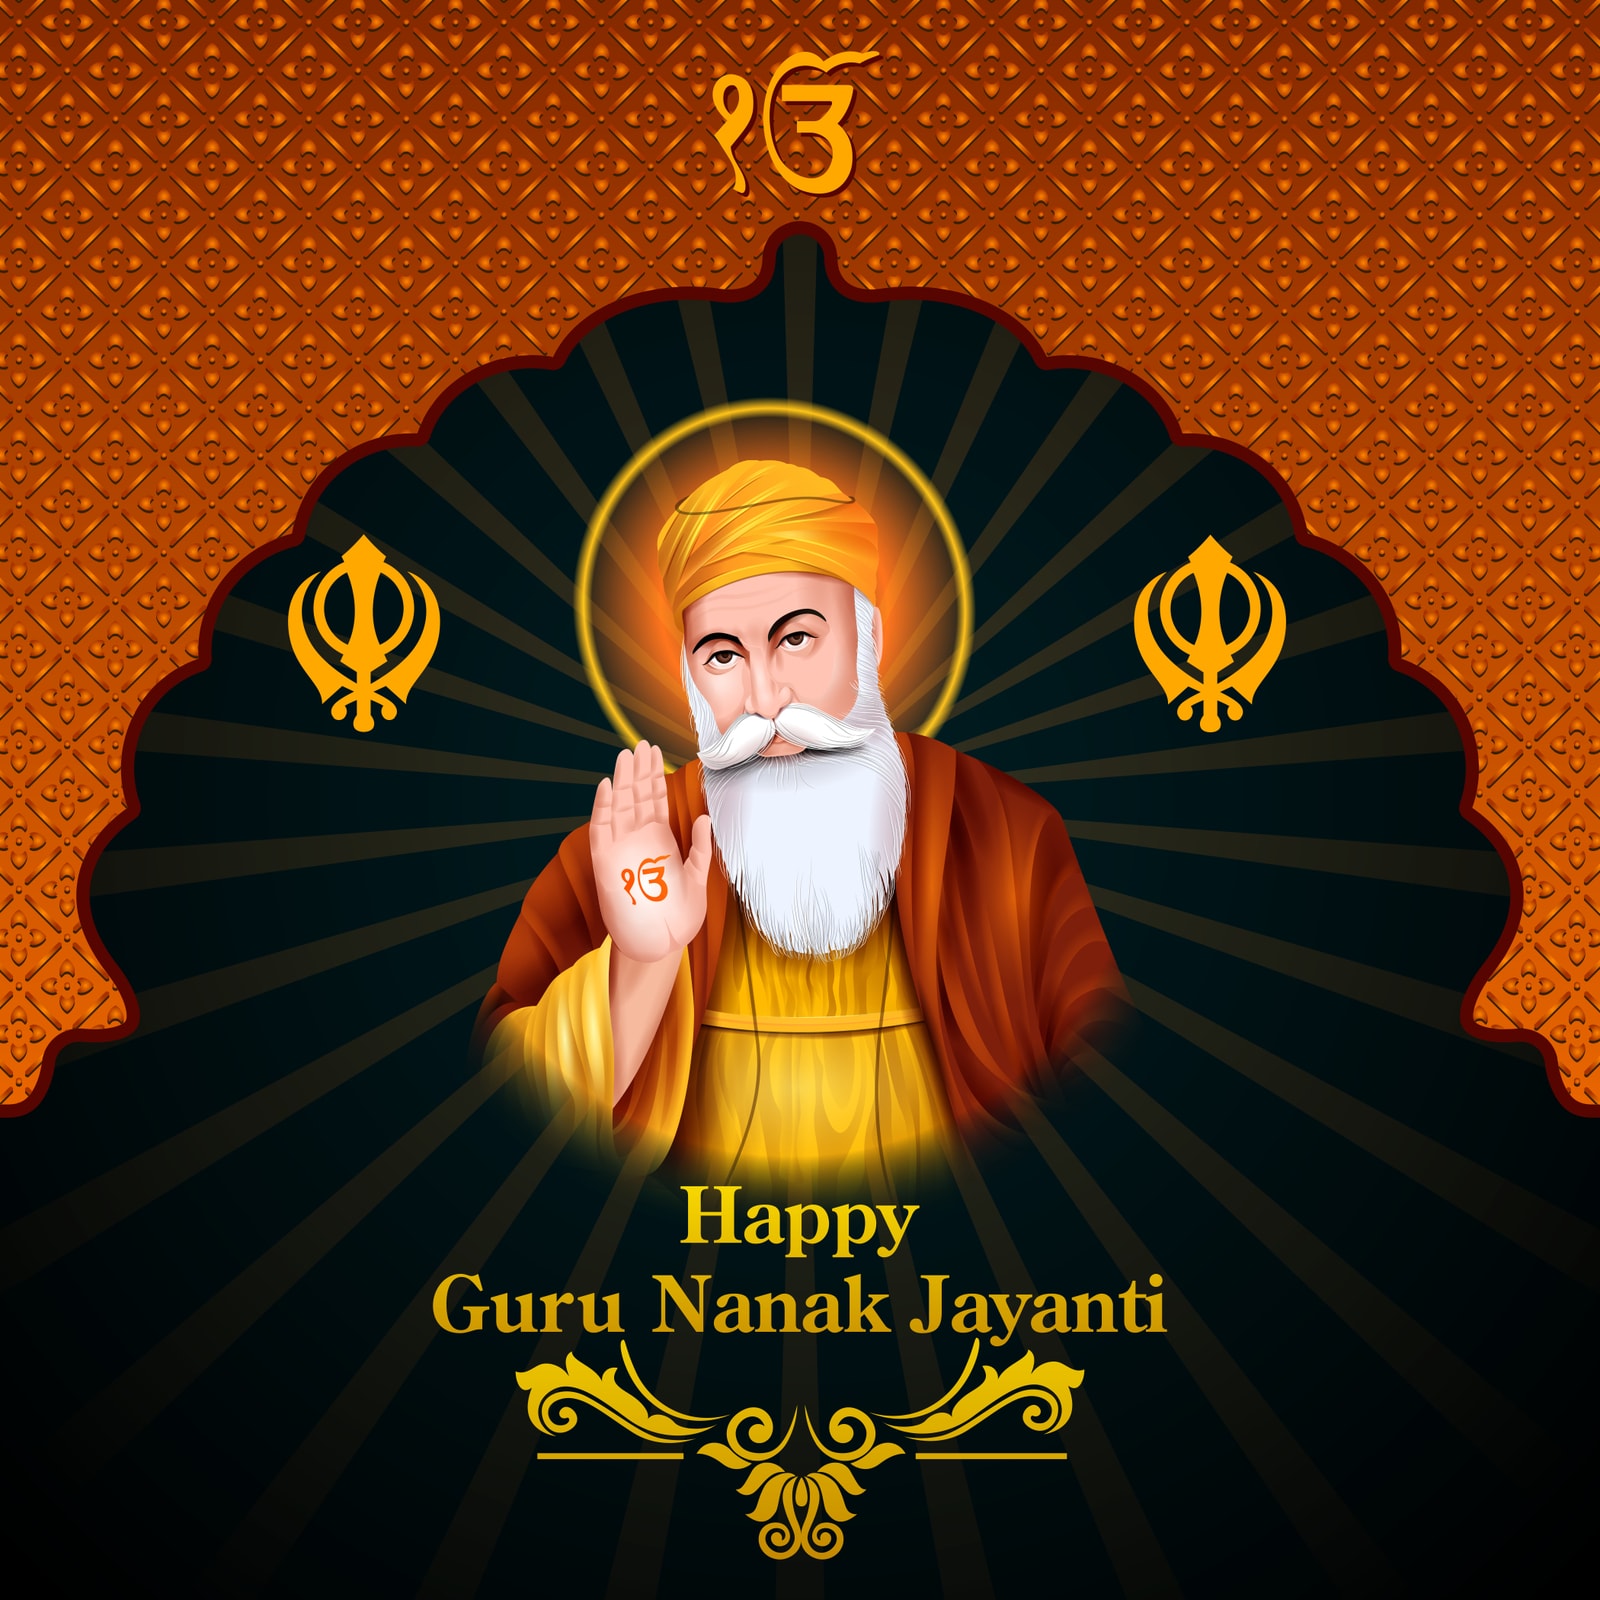 Happy Guru Nanak Jayanti 2021: Images, Wishes, Quotes, Messages and WhatsApp Greetings to Share on Gurpurab. (Image: Shutterstock)